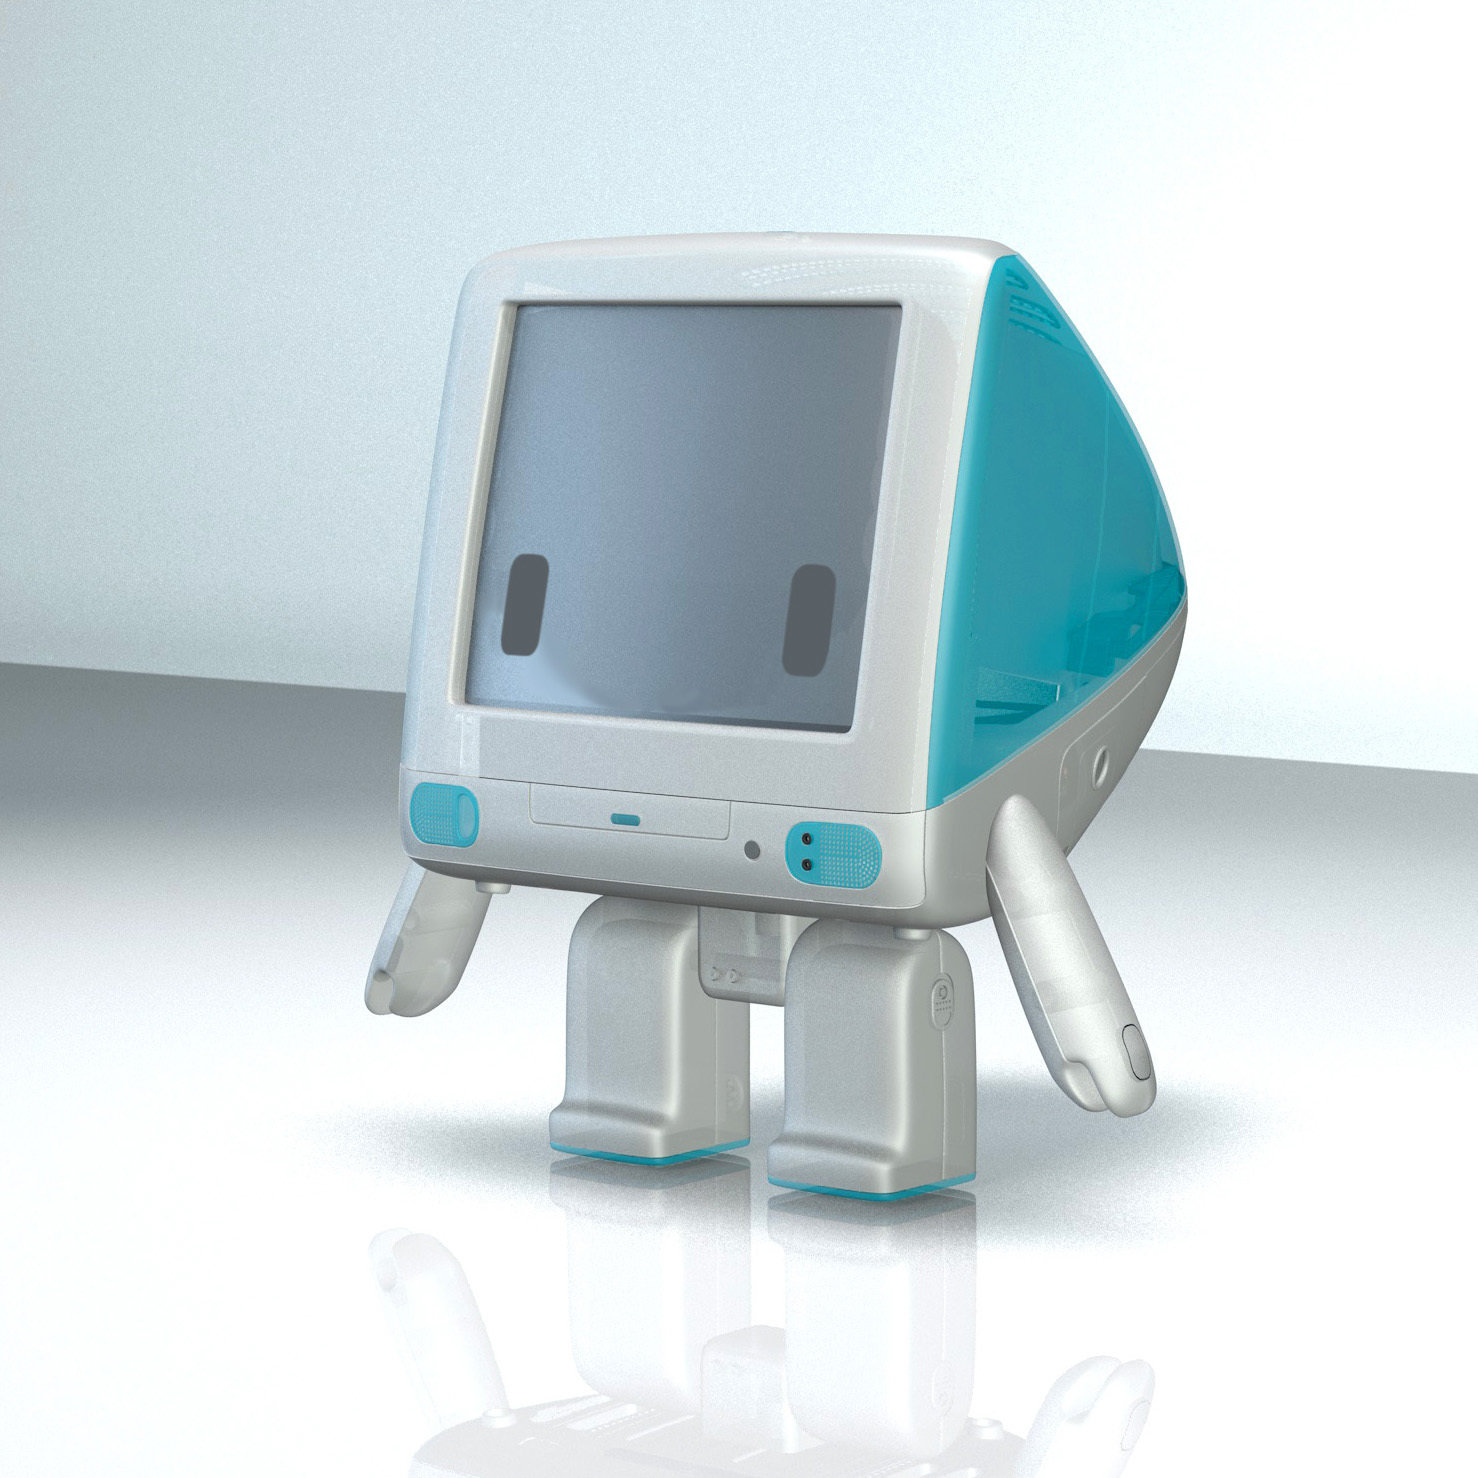 Designer uses iMac G3 design to create adorable toy robots